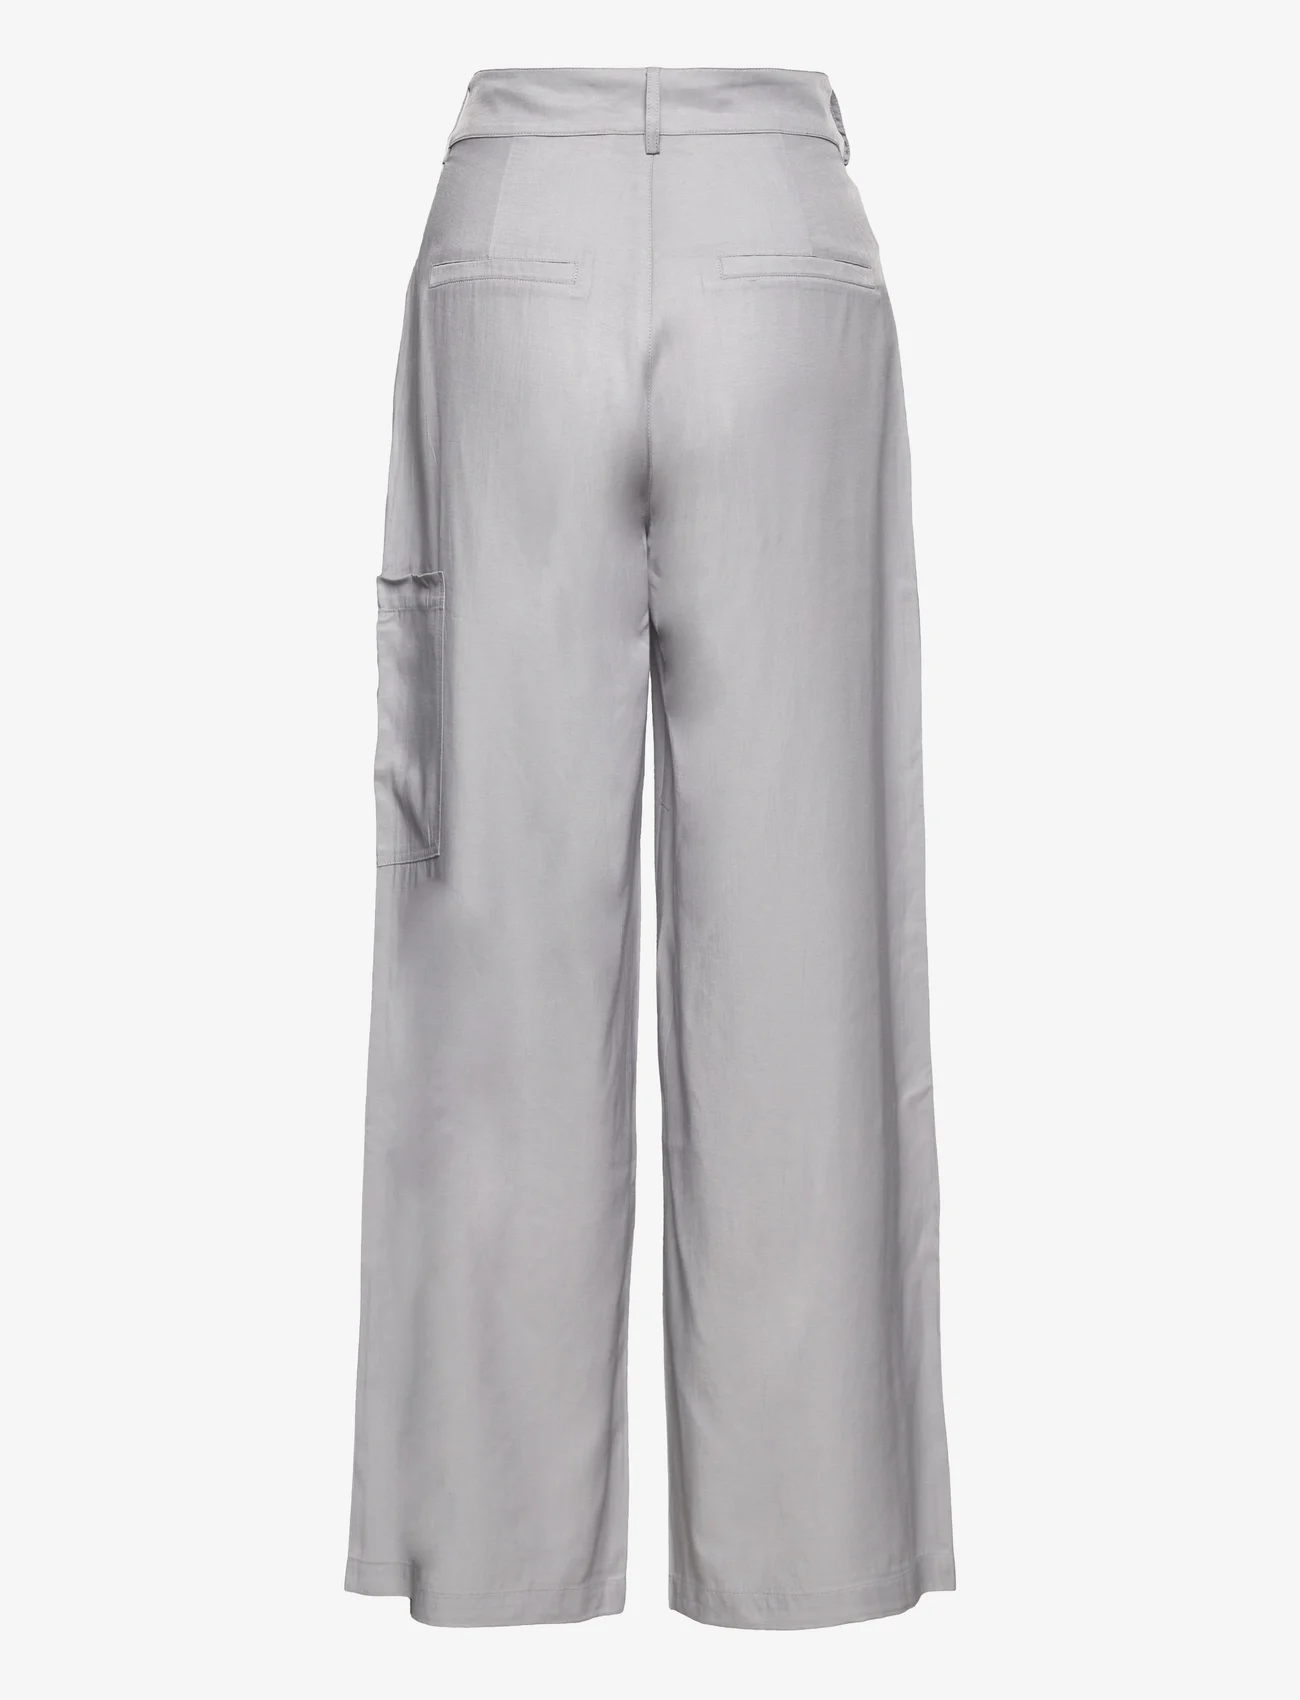 A-View - Leona pants - cargo kelnės - light grey - 1